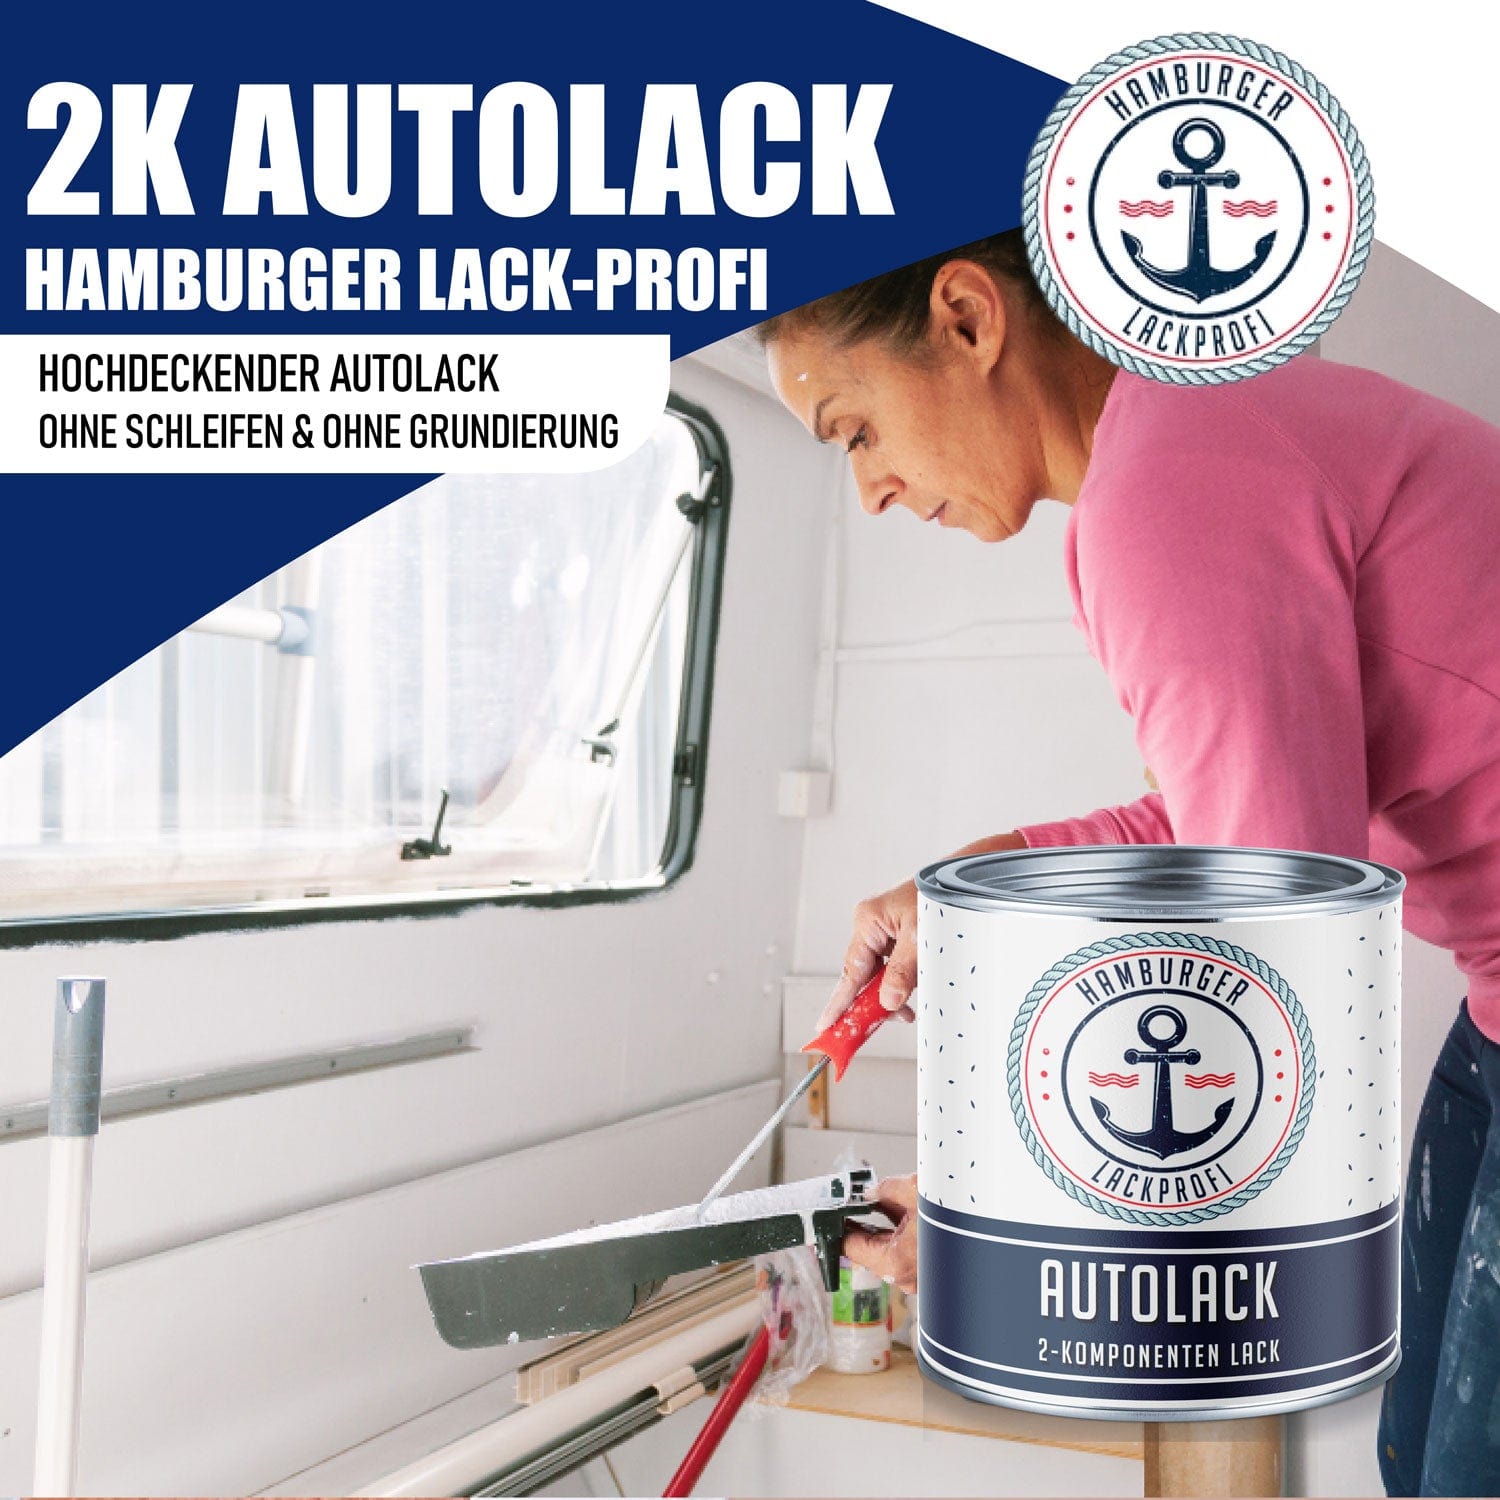 Hamburger Lack-Profi Lacke & Beschichtungen Hamburger Lack-Profi 2K Autolack in Reinrot RAL 3028 mit Lackierset (X300) & Verdünnung (1 L) - 30% Sparangebot